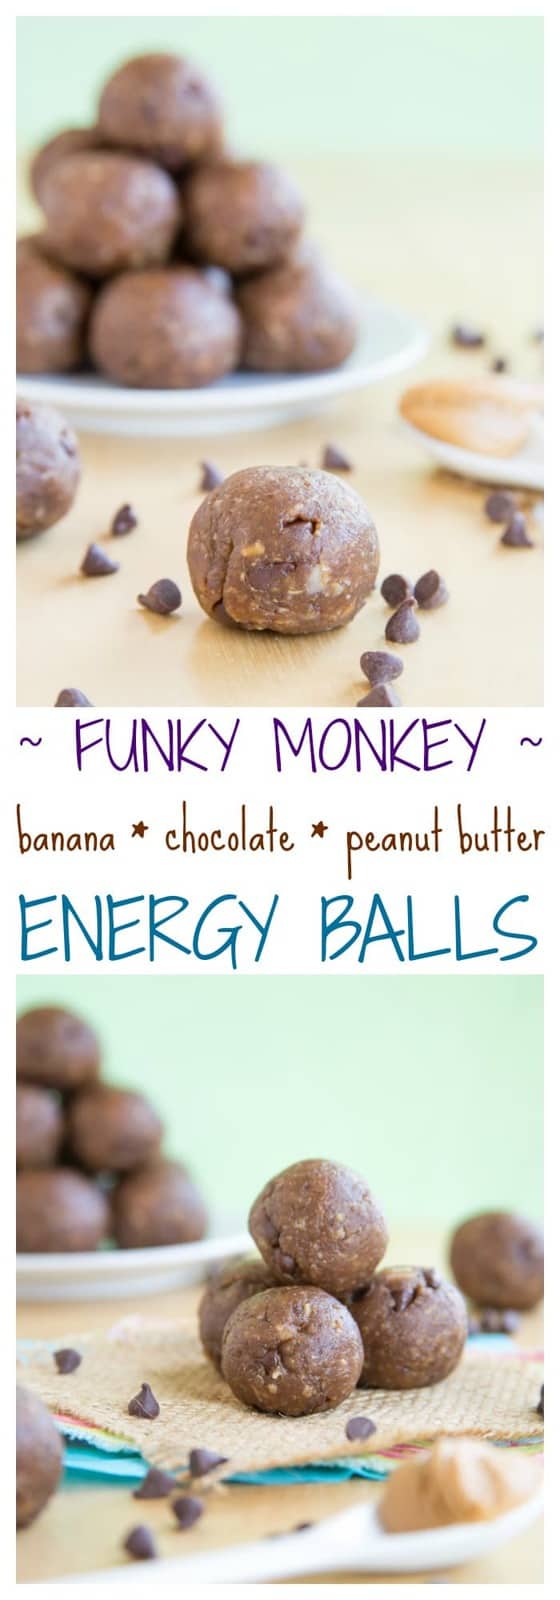 Banana Chocolate Peanut Butter Energy Balls | Cupcakes ... - 560 x 1600 jpeg 56kB